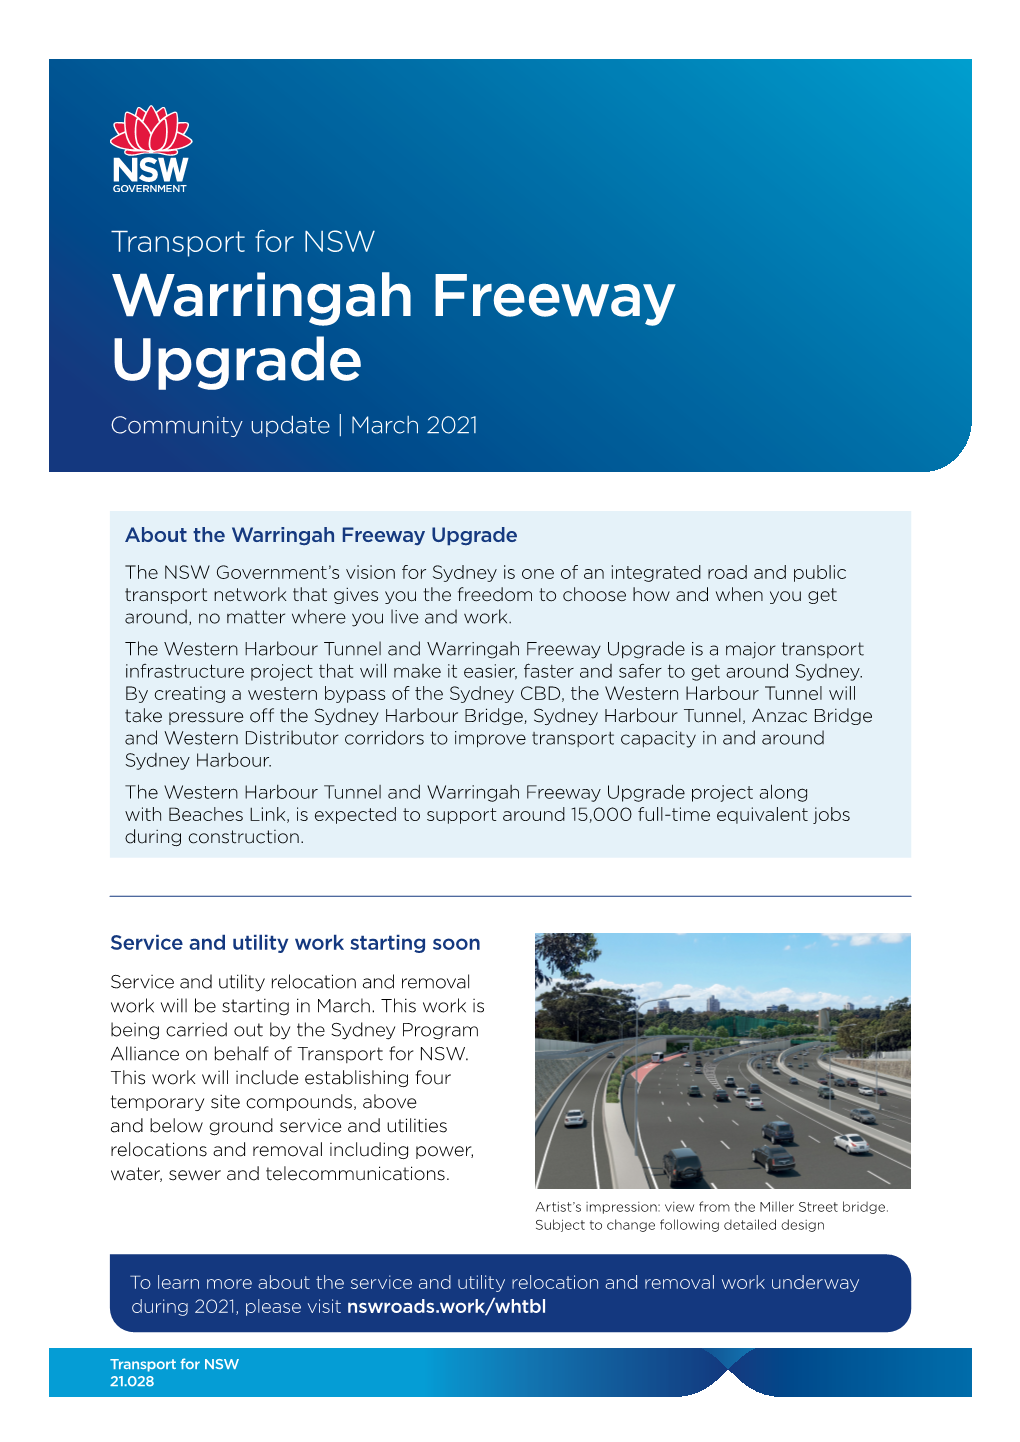 Warringah Freeway Upgrade Community Update | March 2021